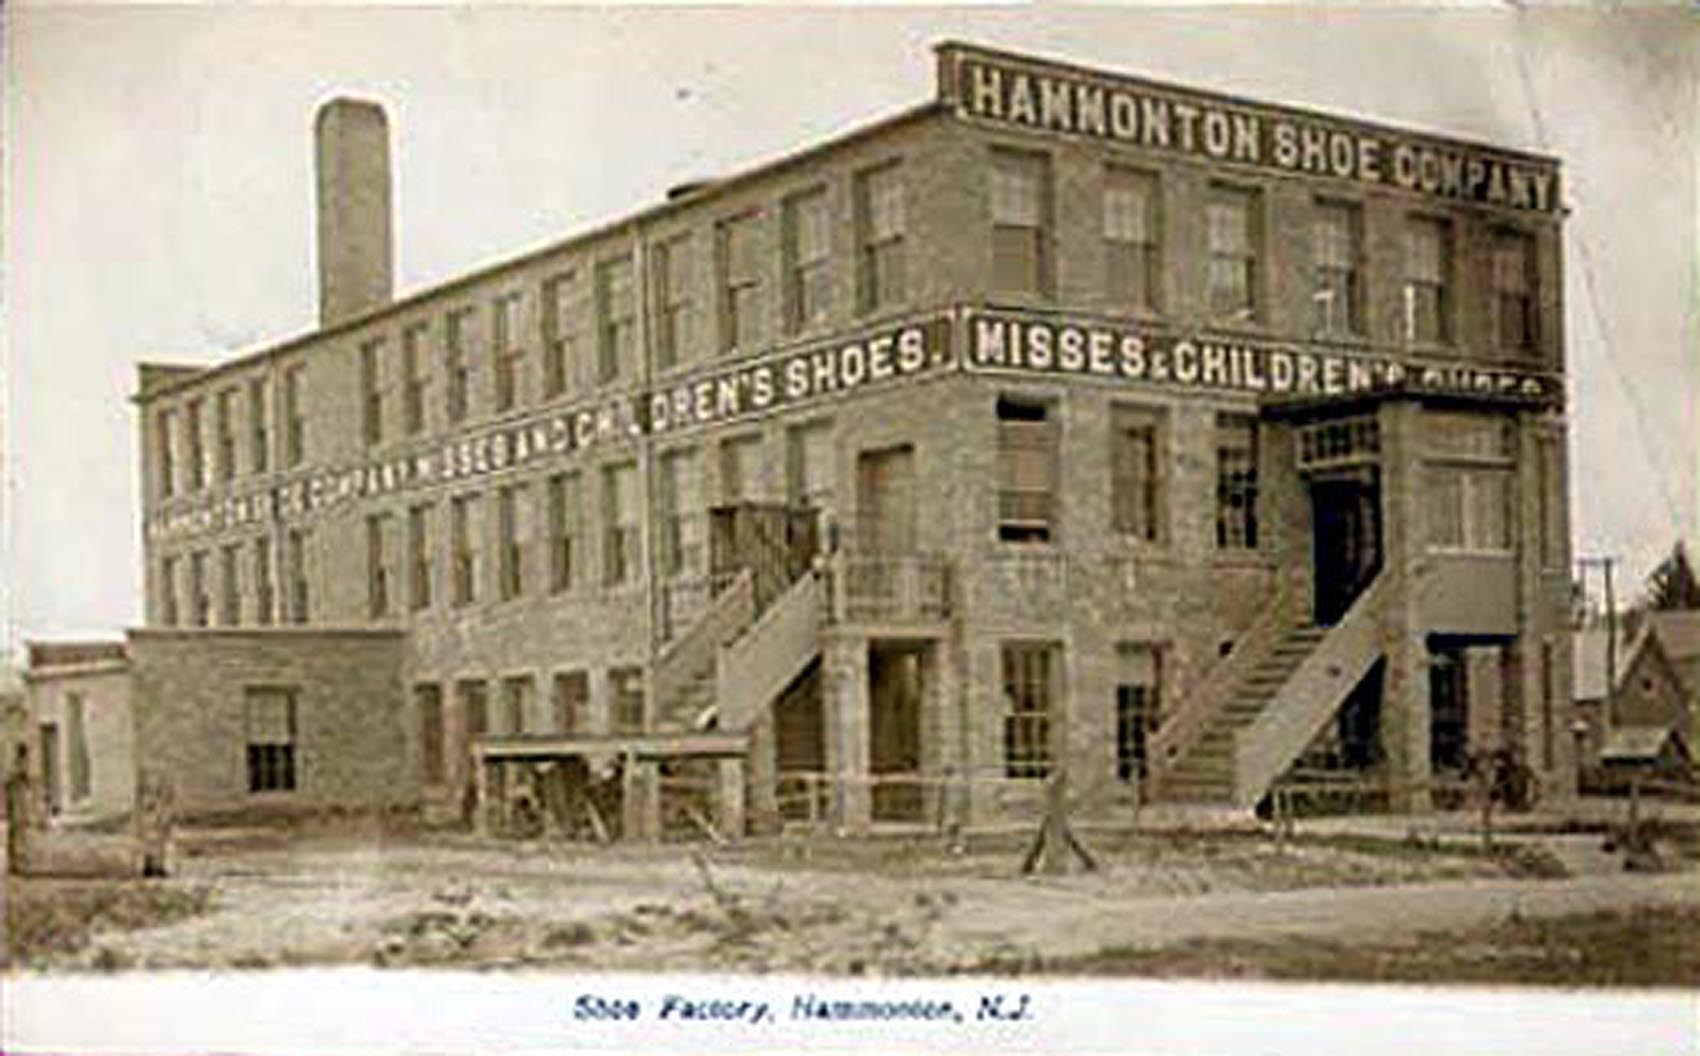 Hammonton - Hammonton Shoe Company Factory - 1911